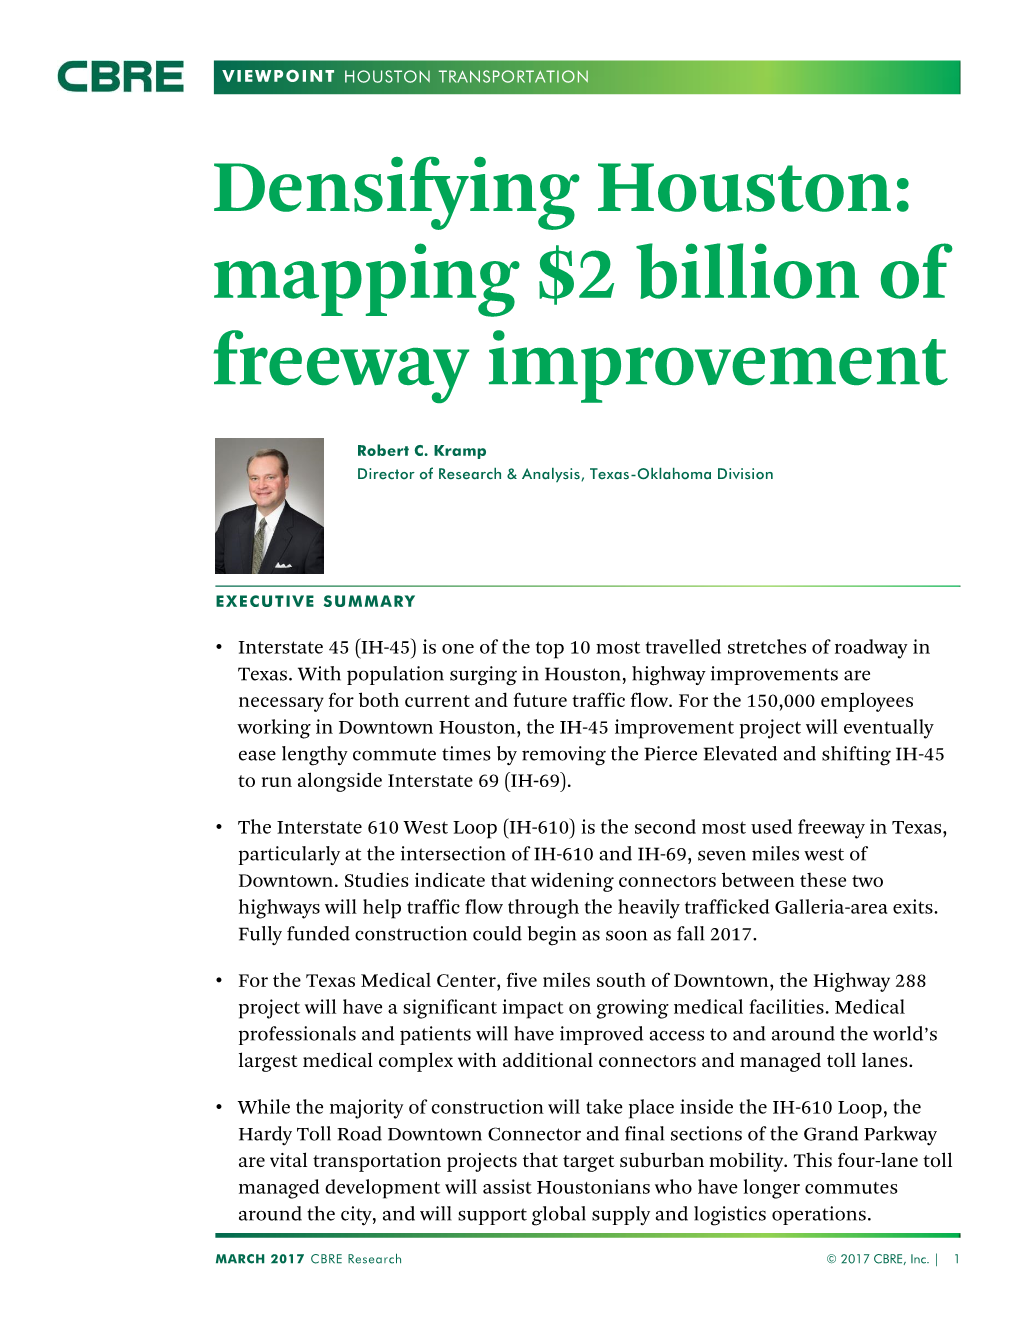 Densifying Houston: Mapping $2 Billion of Freeway Improvement